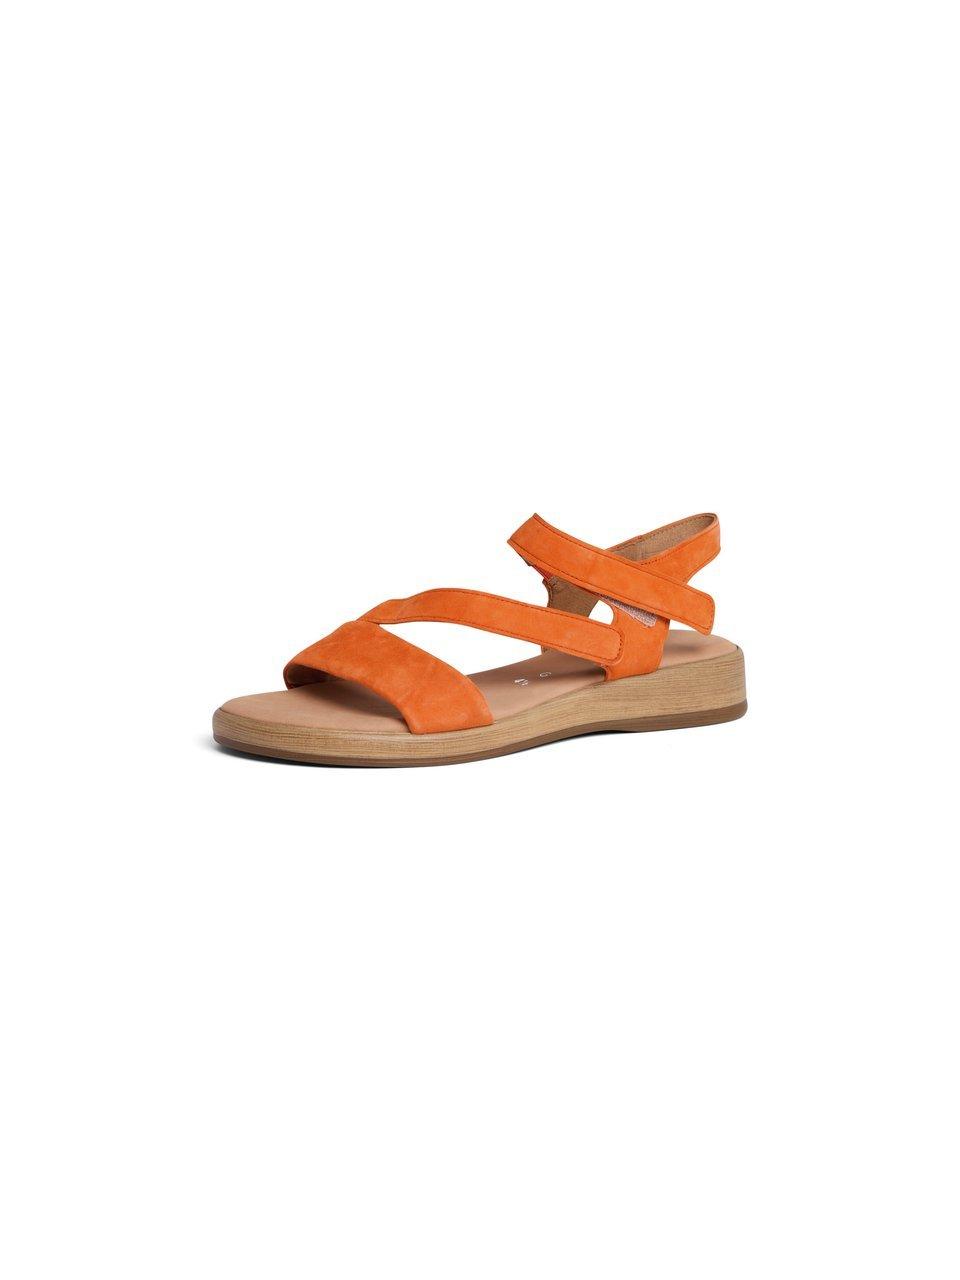 Gabor Comfort - Les sandales